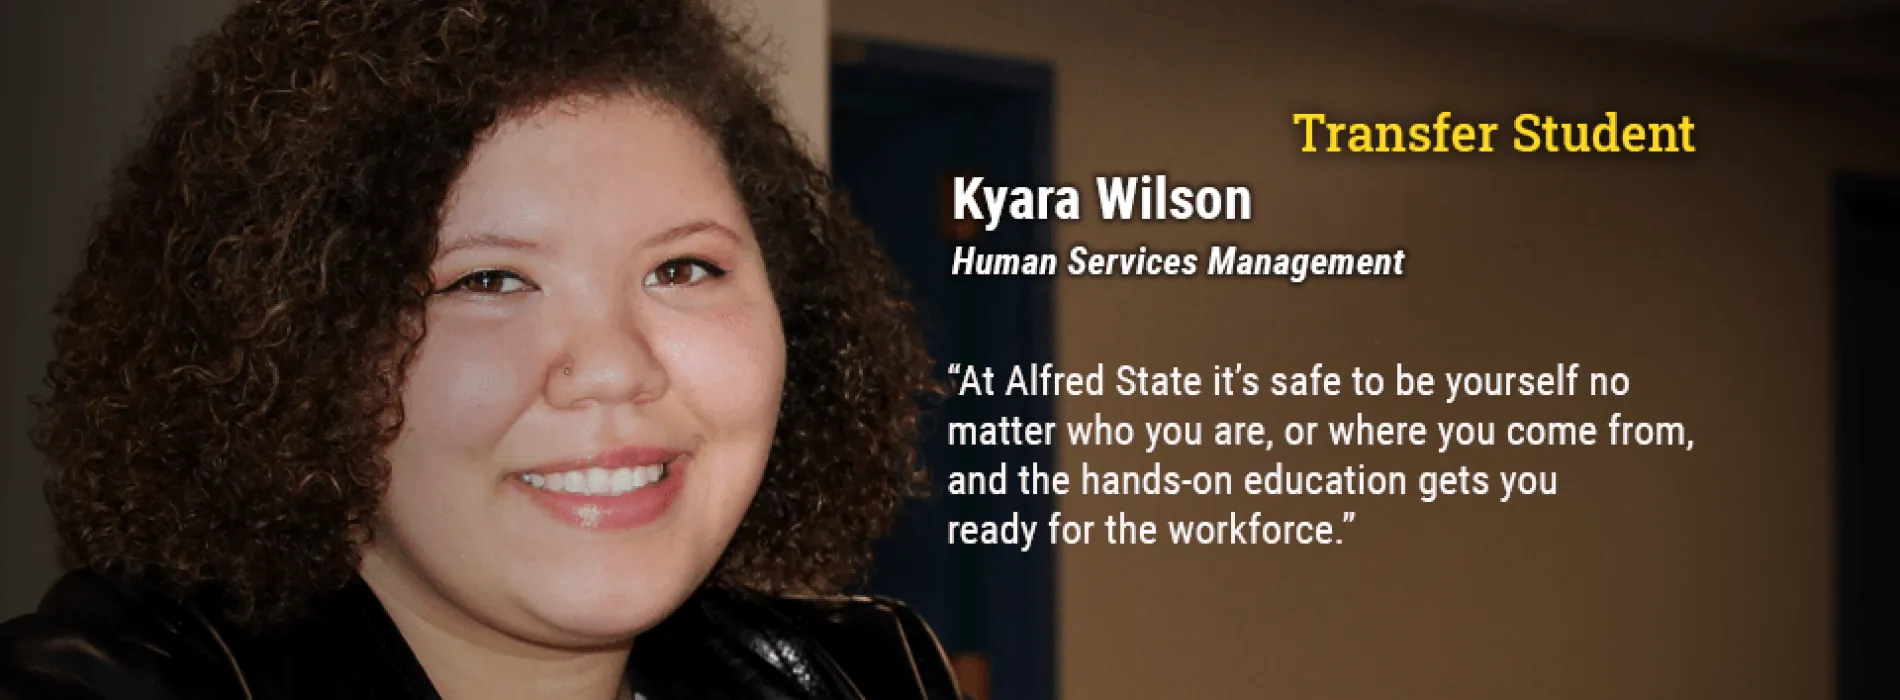 Transfer Student Kyara Wilson, Human Services Management. 